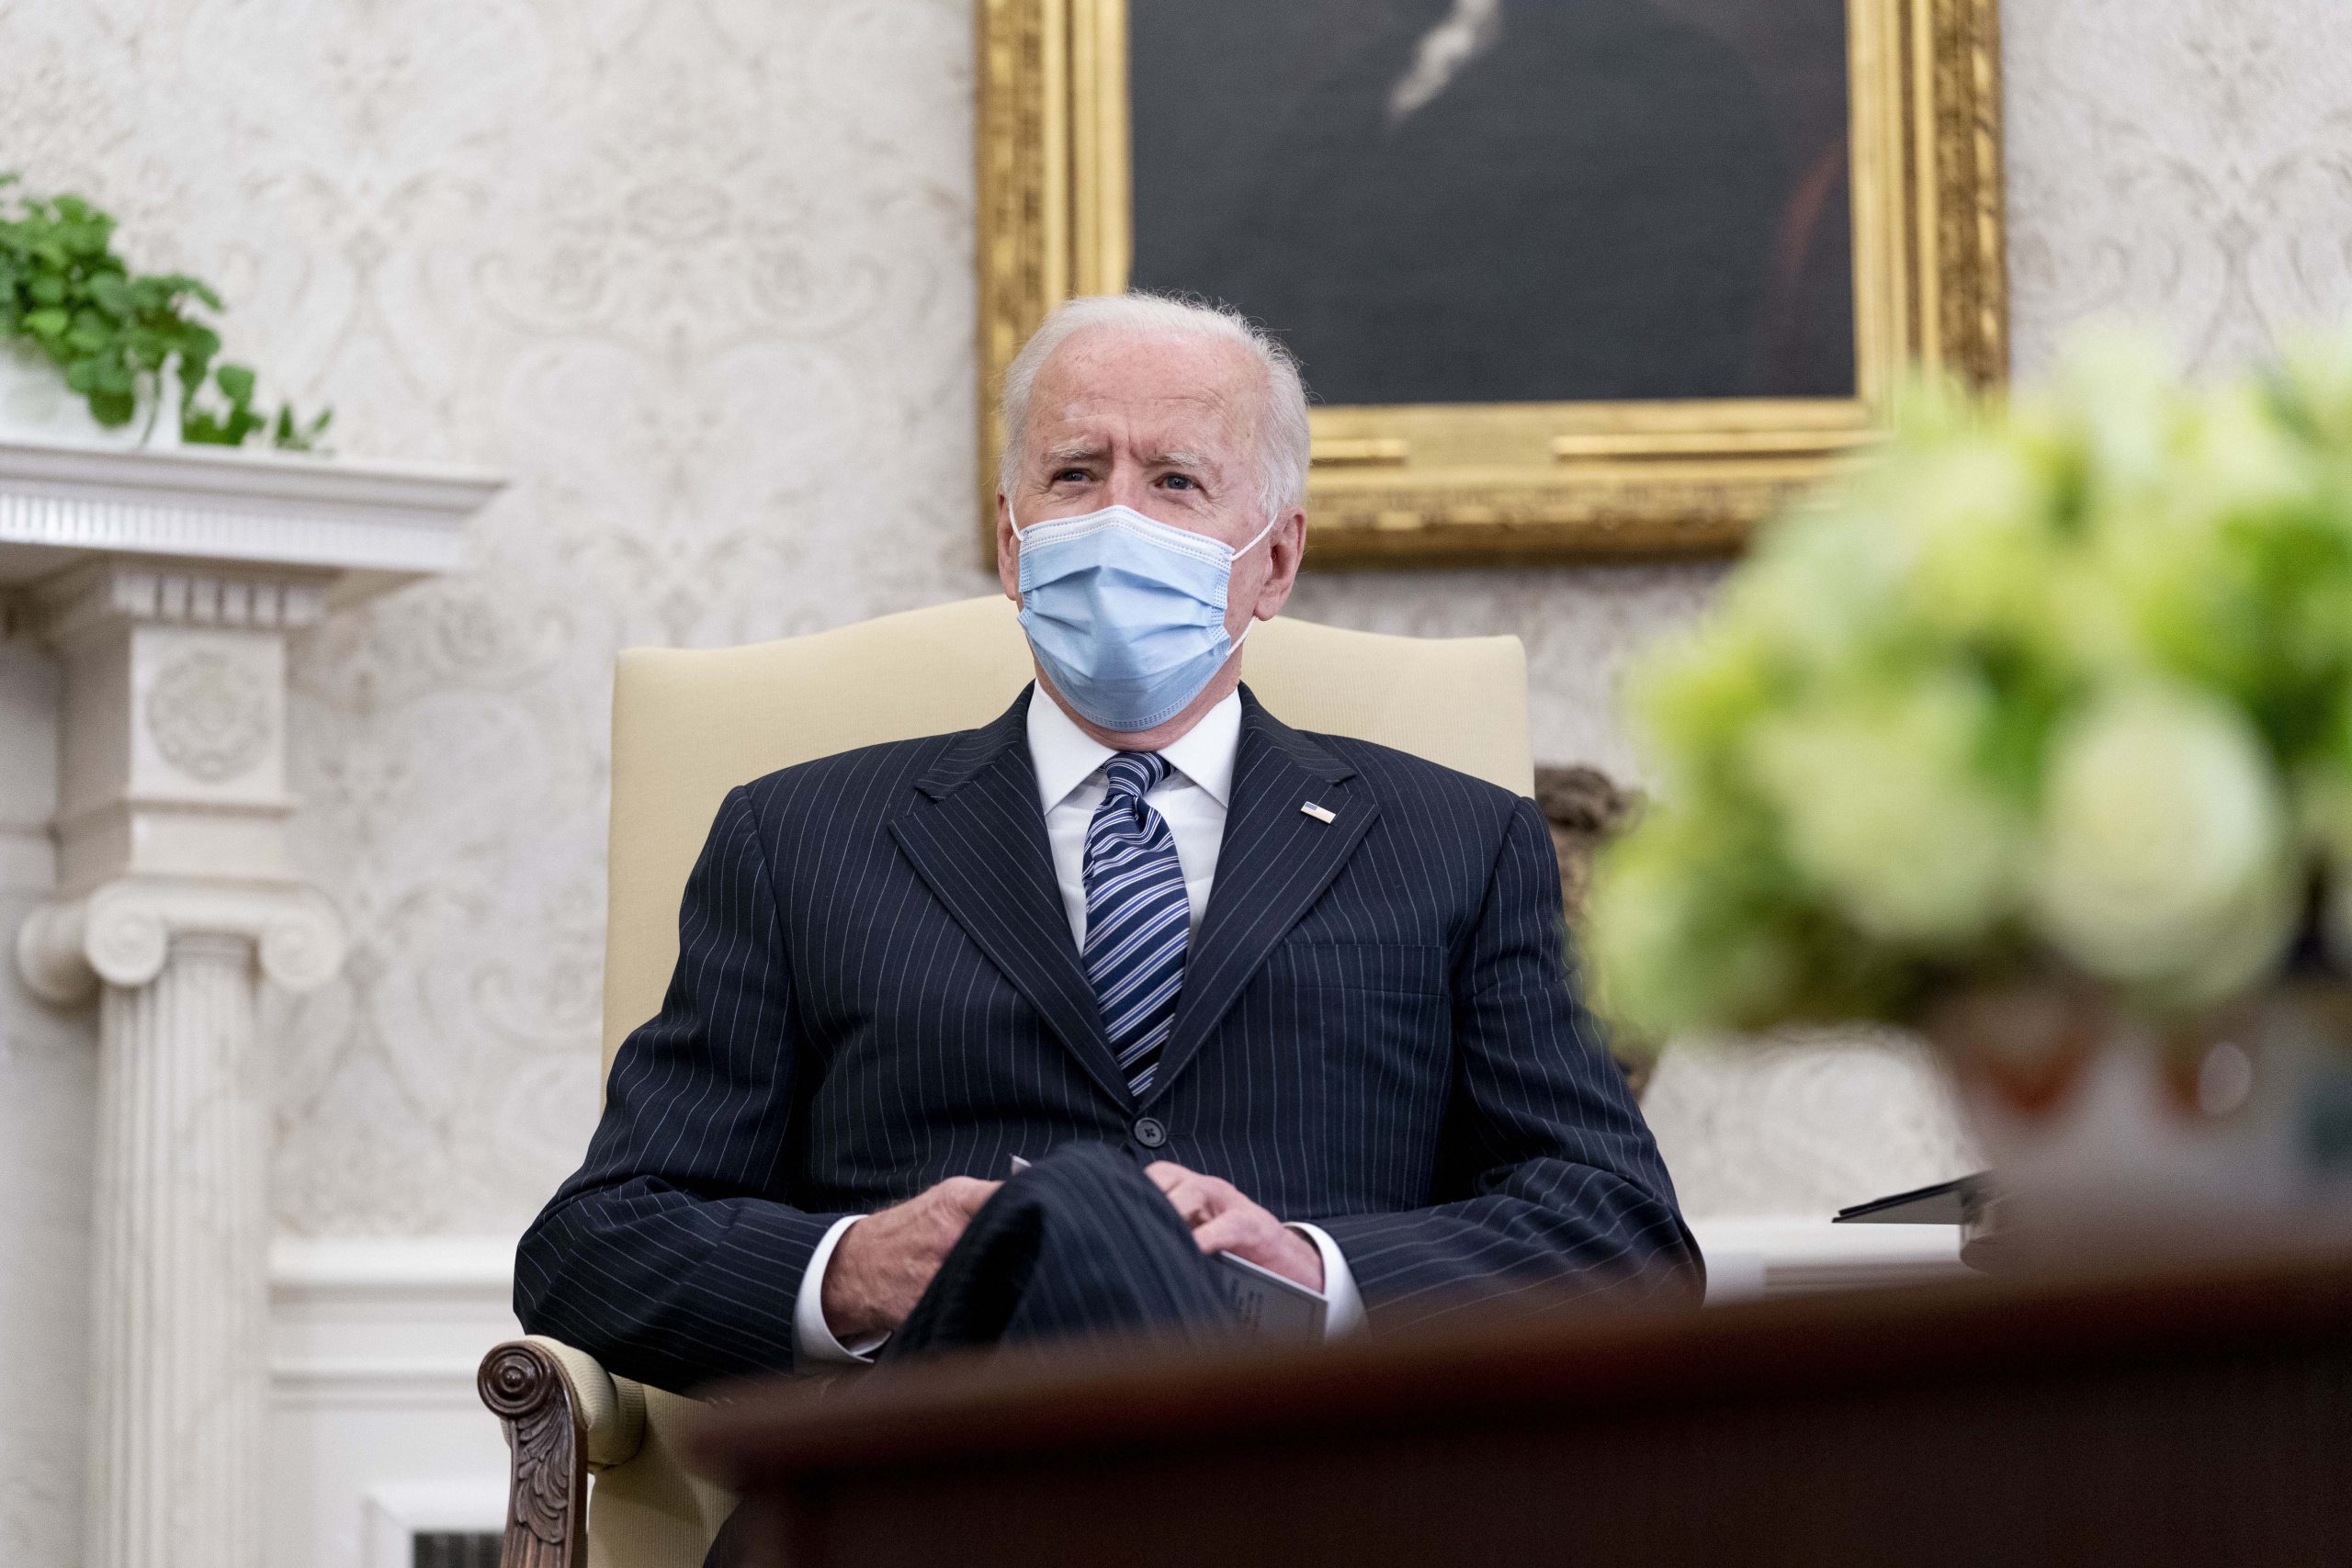 US President Joe Biden is ‘determined to help India’ amid COVID-19 crisis